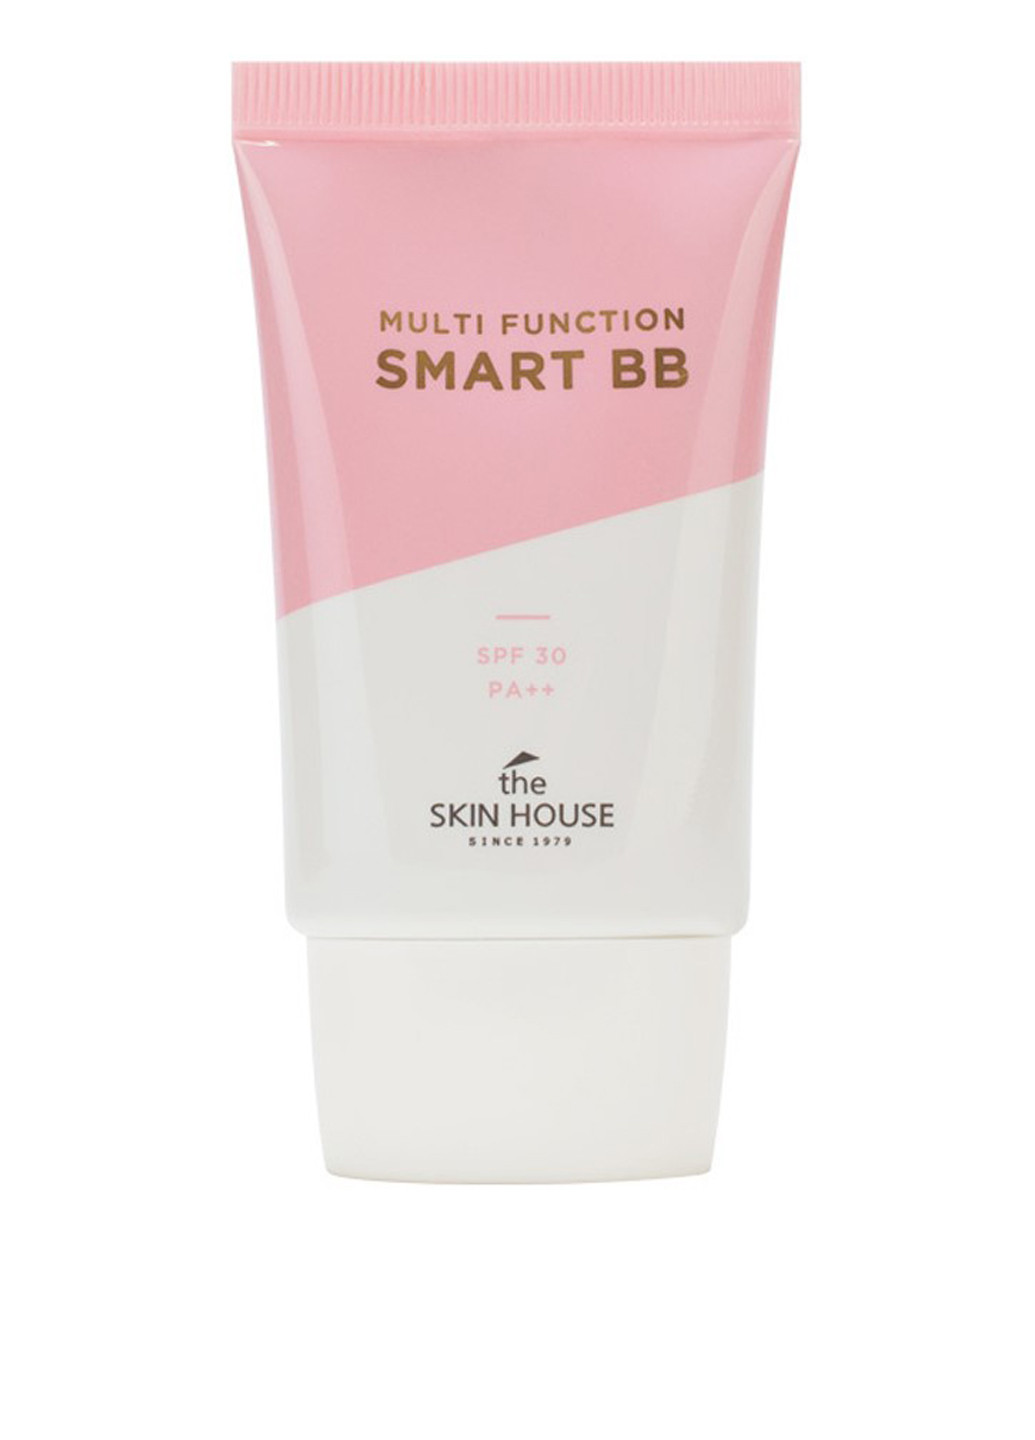 Многофункциональный BB крем MULTI-FUNCTION SMART BB (SPF30, PA++), 30 мл The Skin House